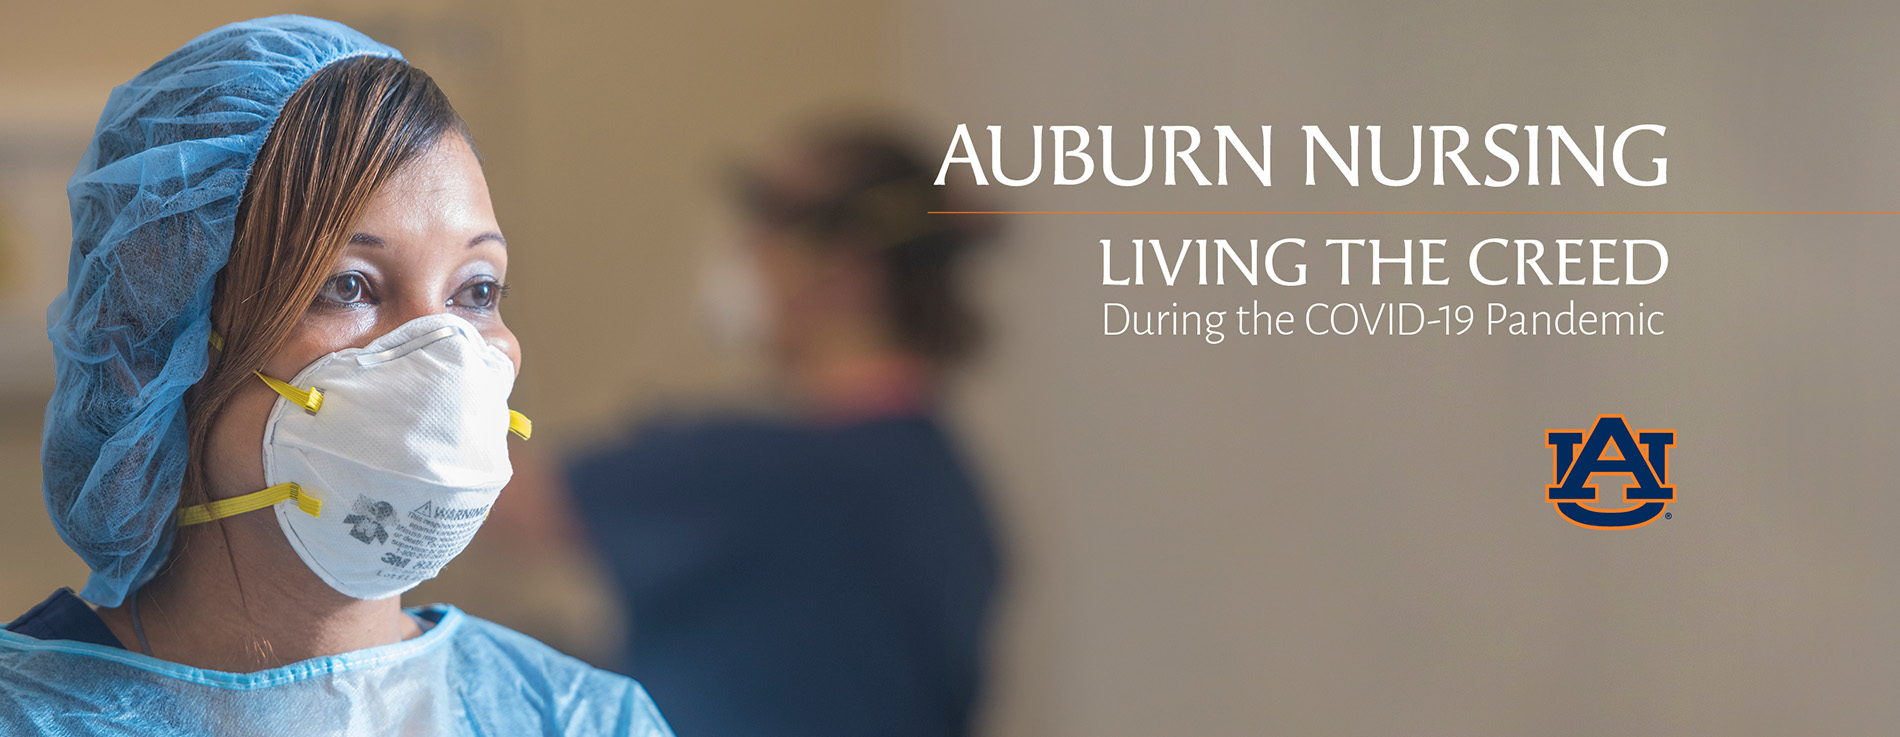 Auburn University Nursing book featuring alumni stories from the frontlines